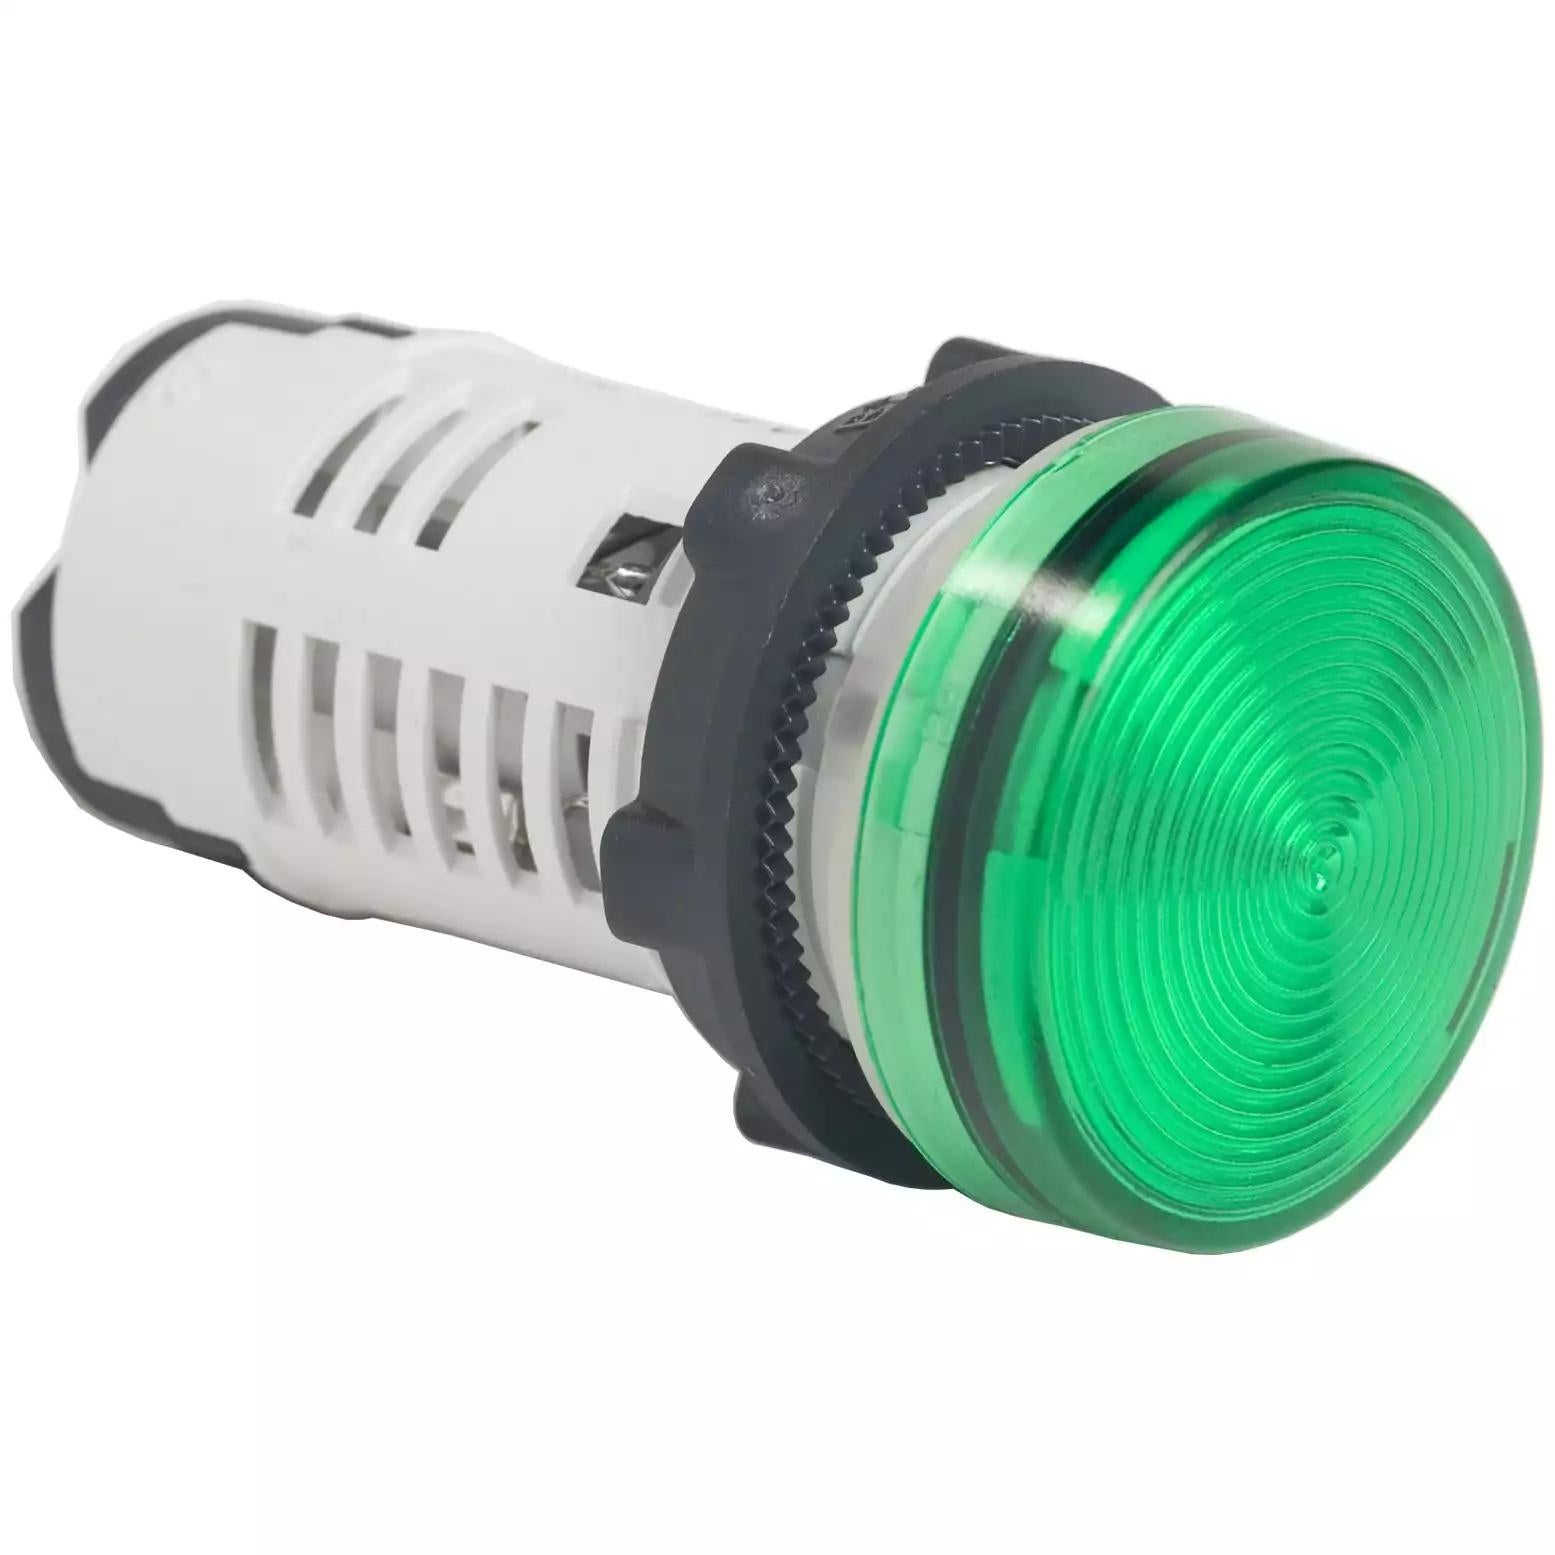 Harmony XB7, Monolithic Pilot Light, Plastic, Green, 22mm, Integral LED, 110...120V AC